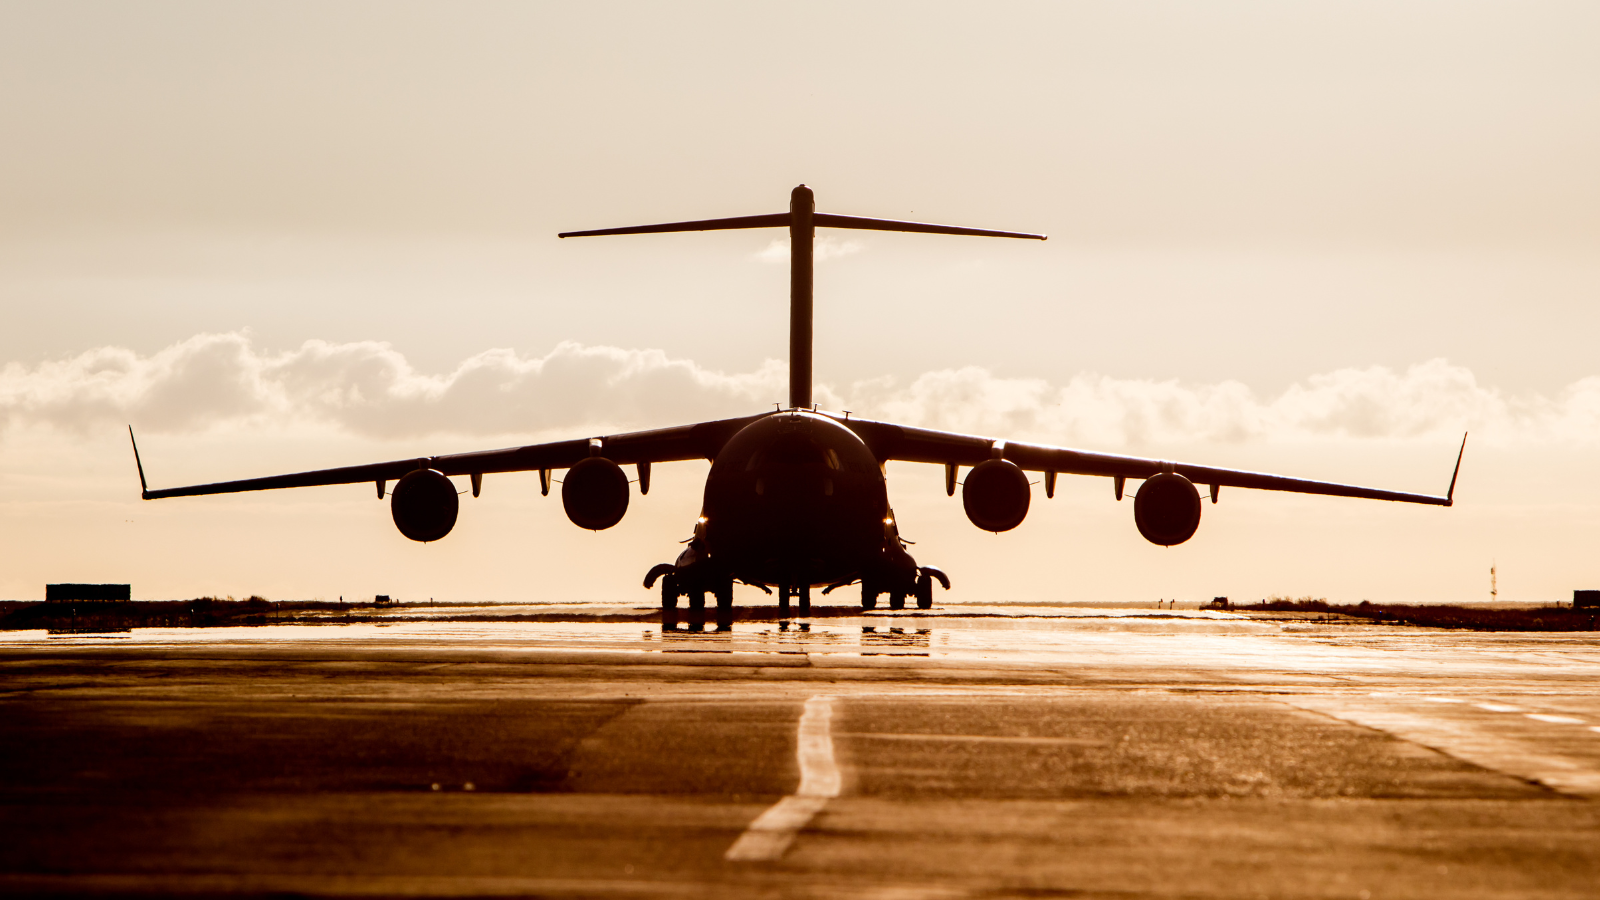 An aeroplane on a runway.